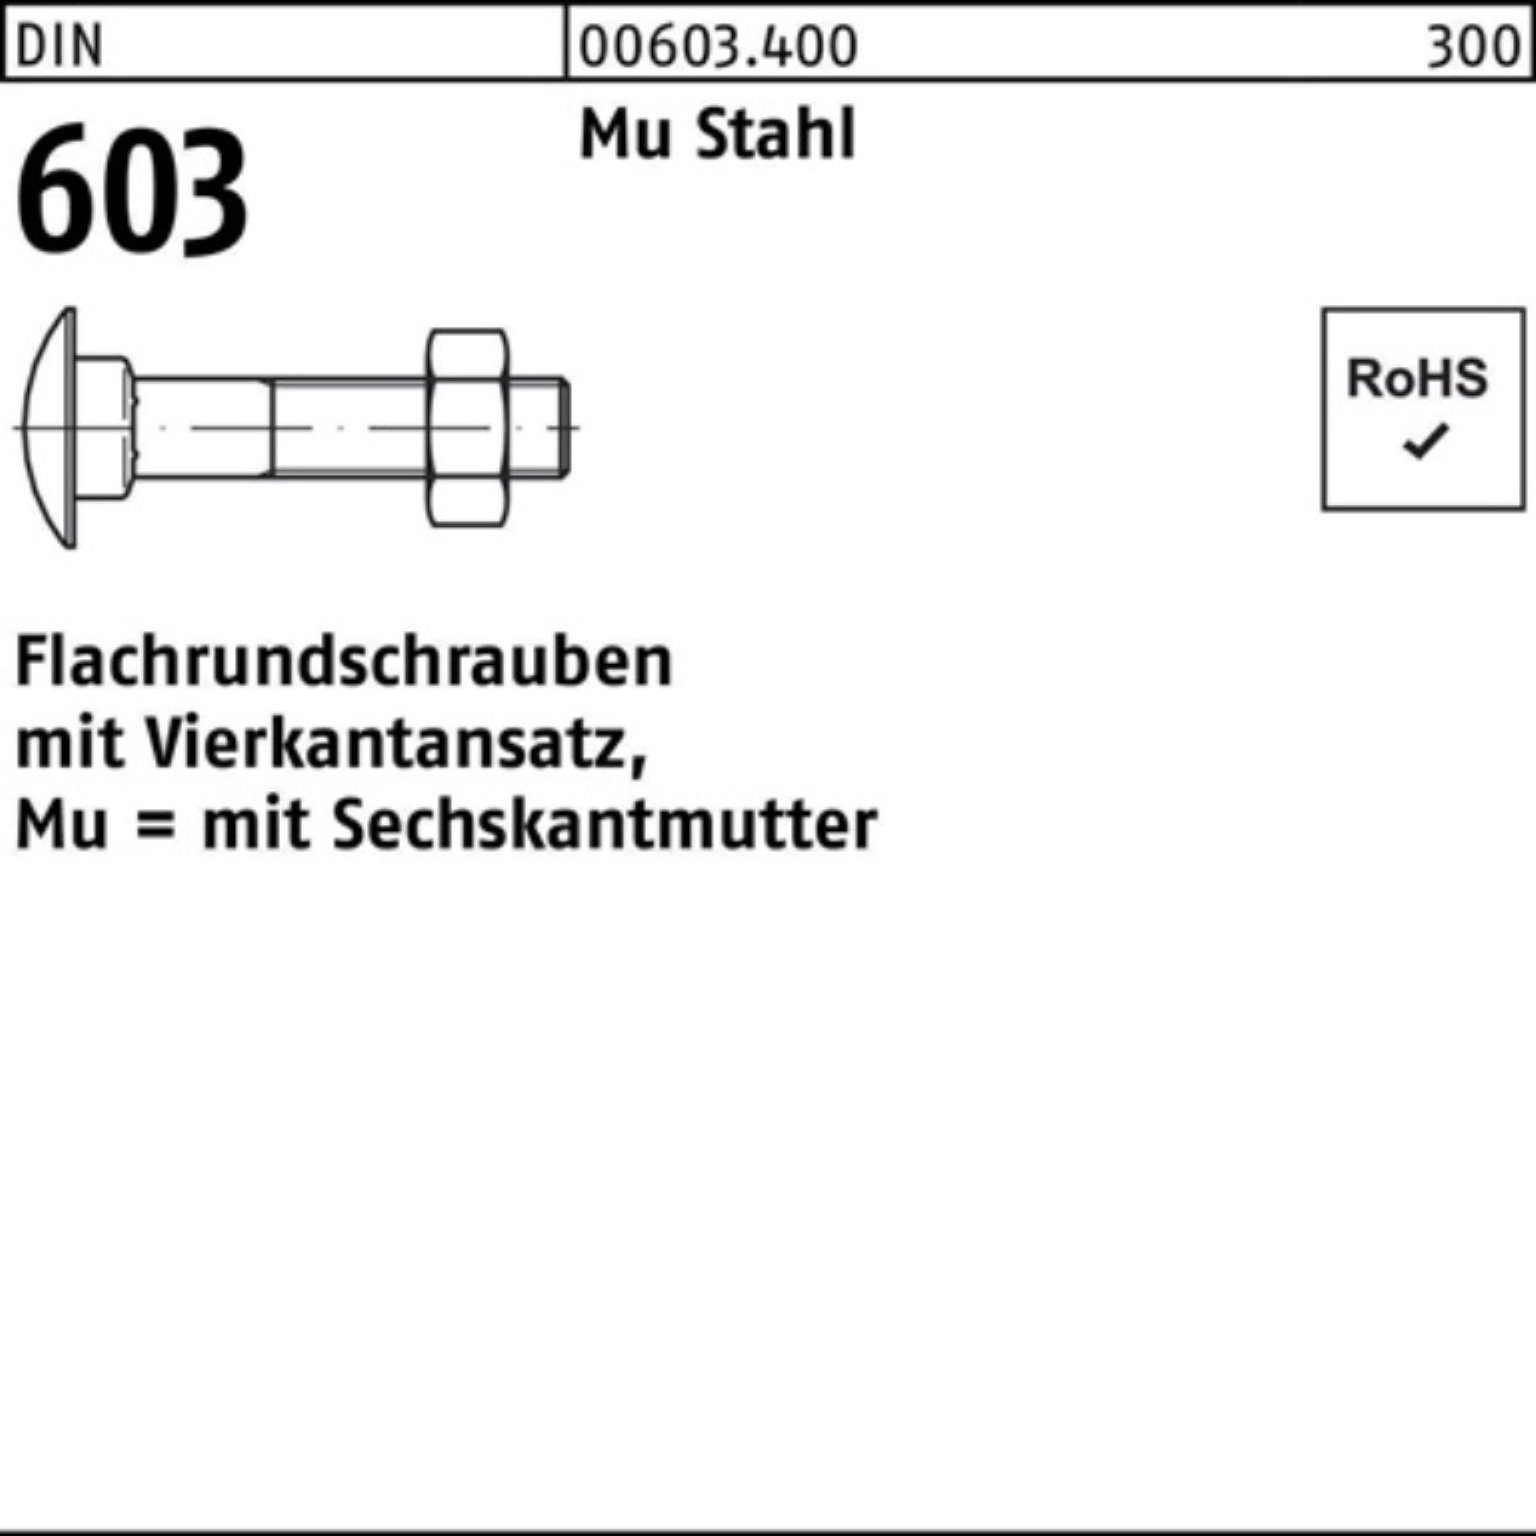 Schraube DIN Pack Vierkantansatz/6-ktmutter 100er 603 Flachrundschraube Reyher M12x200